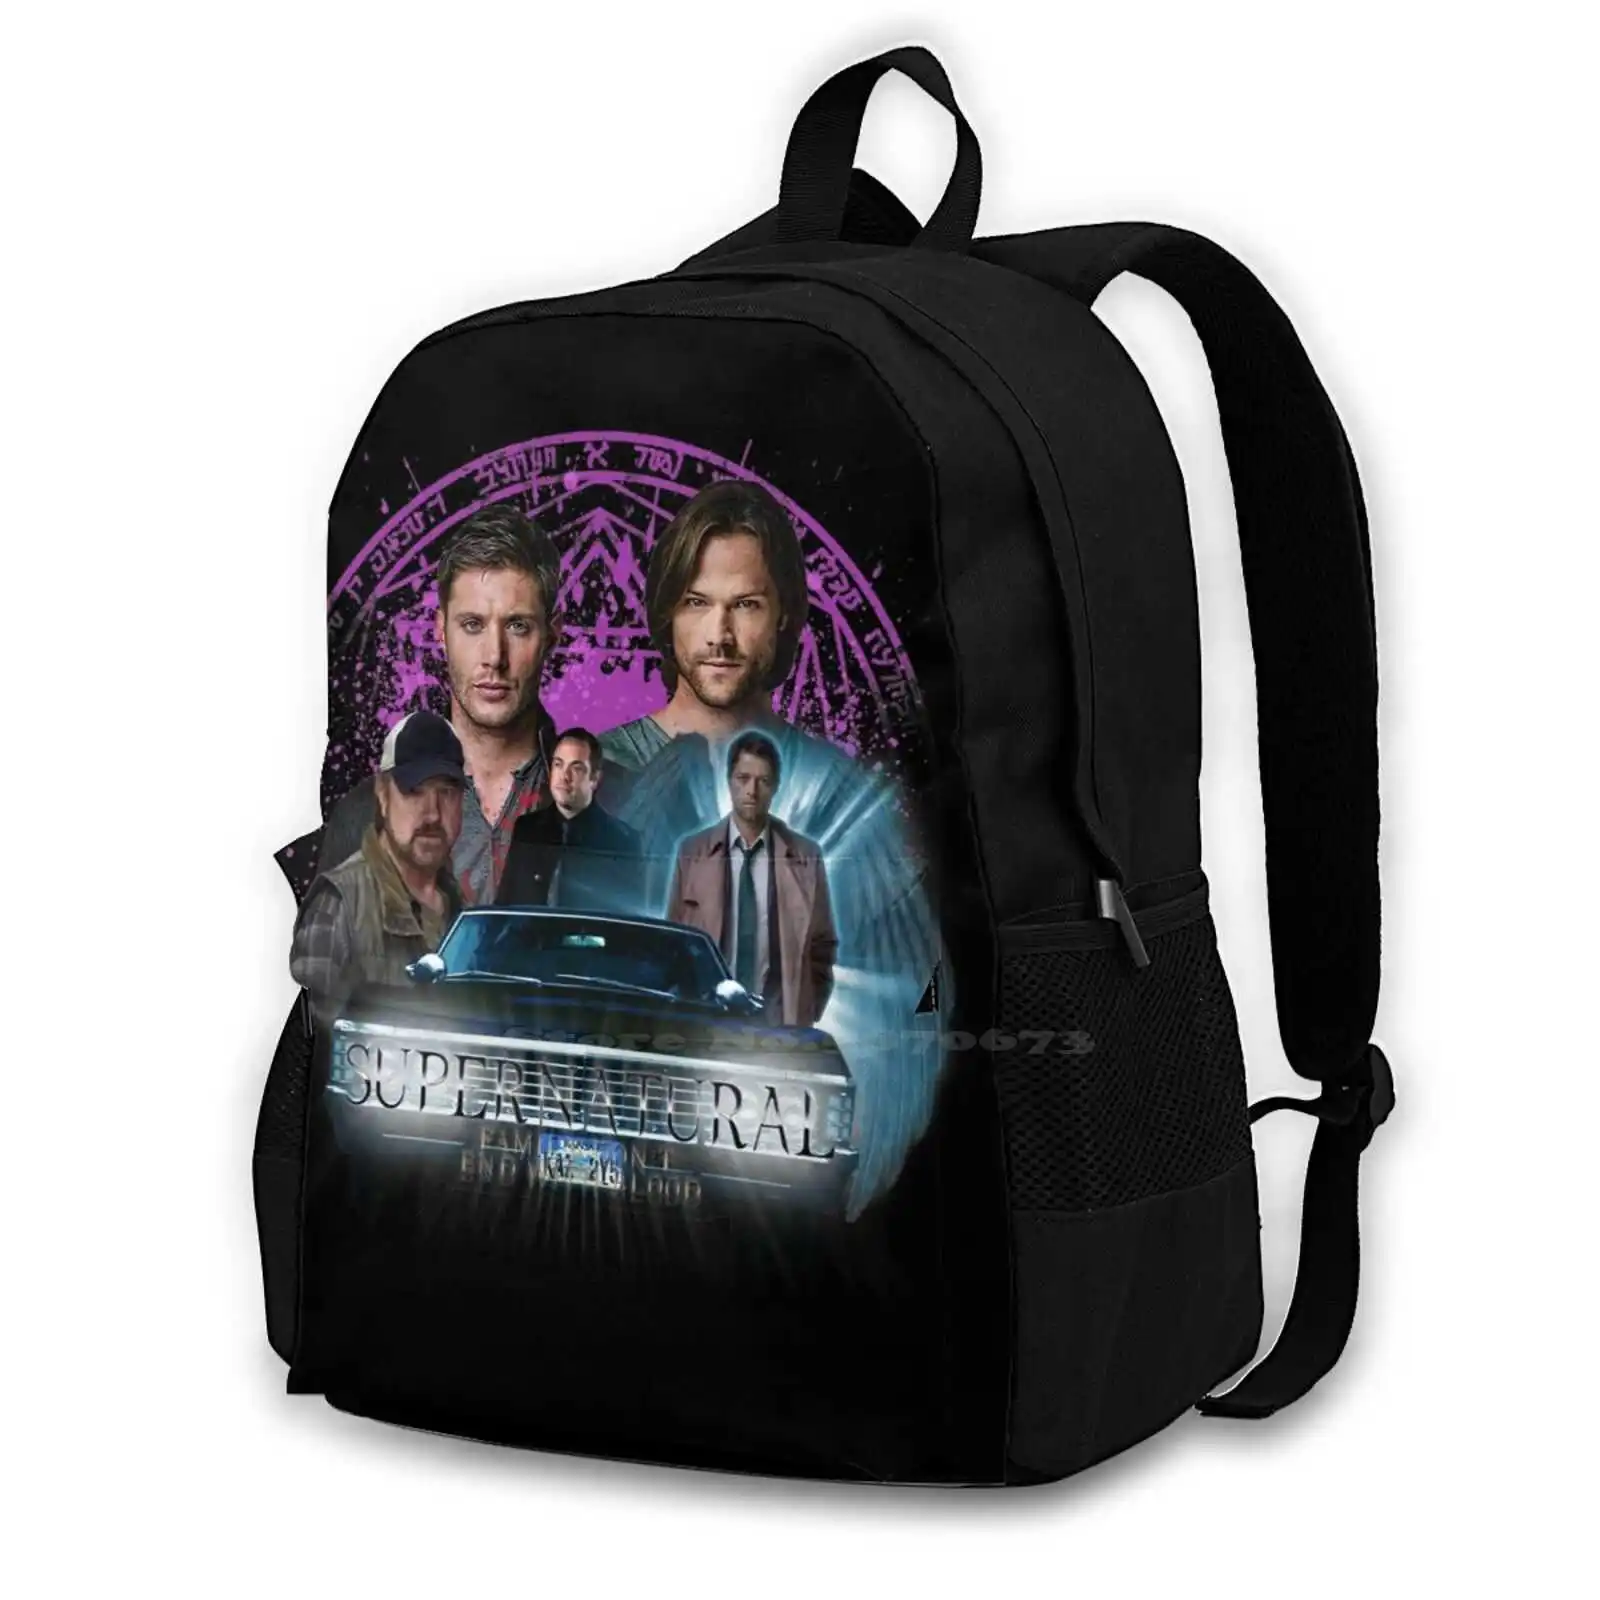 

Supernatural Family Dont End With Blood 2 Teen College Student Backpack Laptop Travel Bags Supernatural Castiel Angel Demon